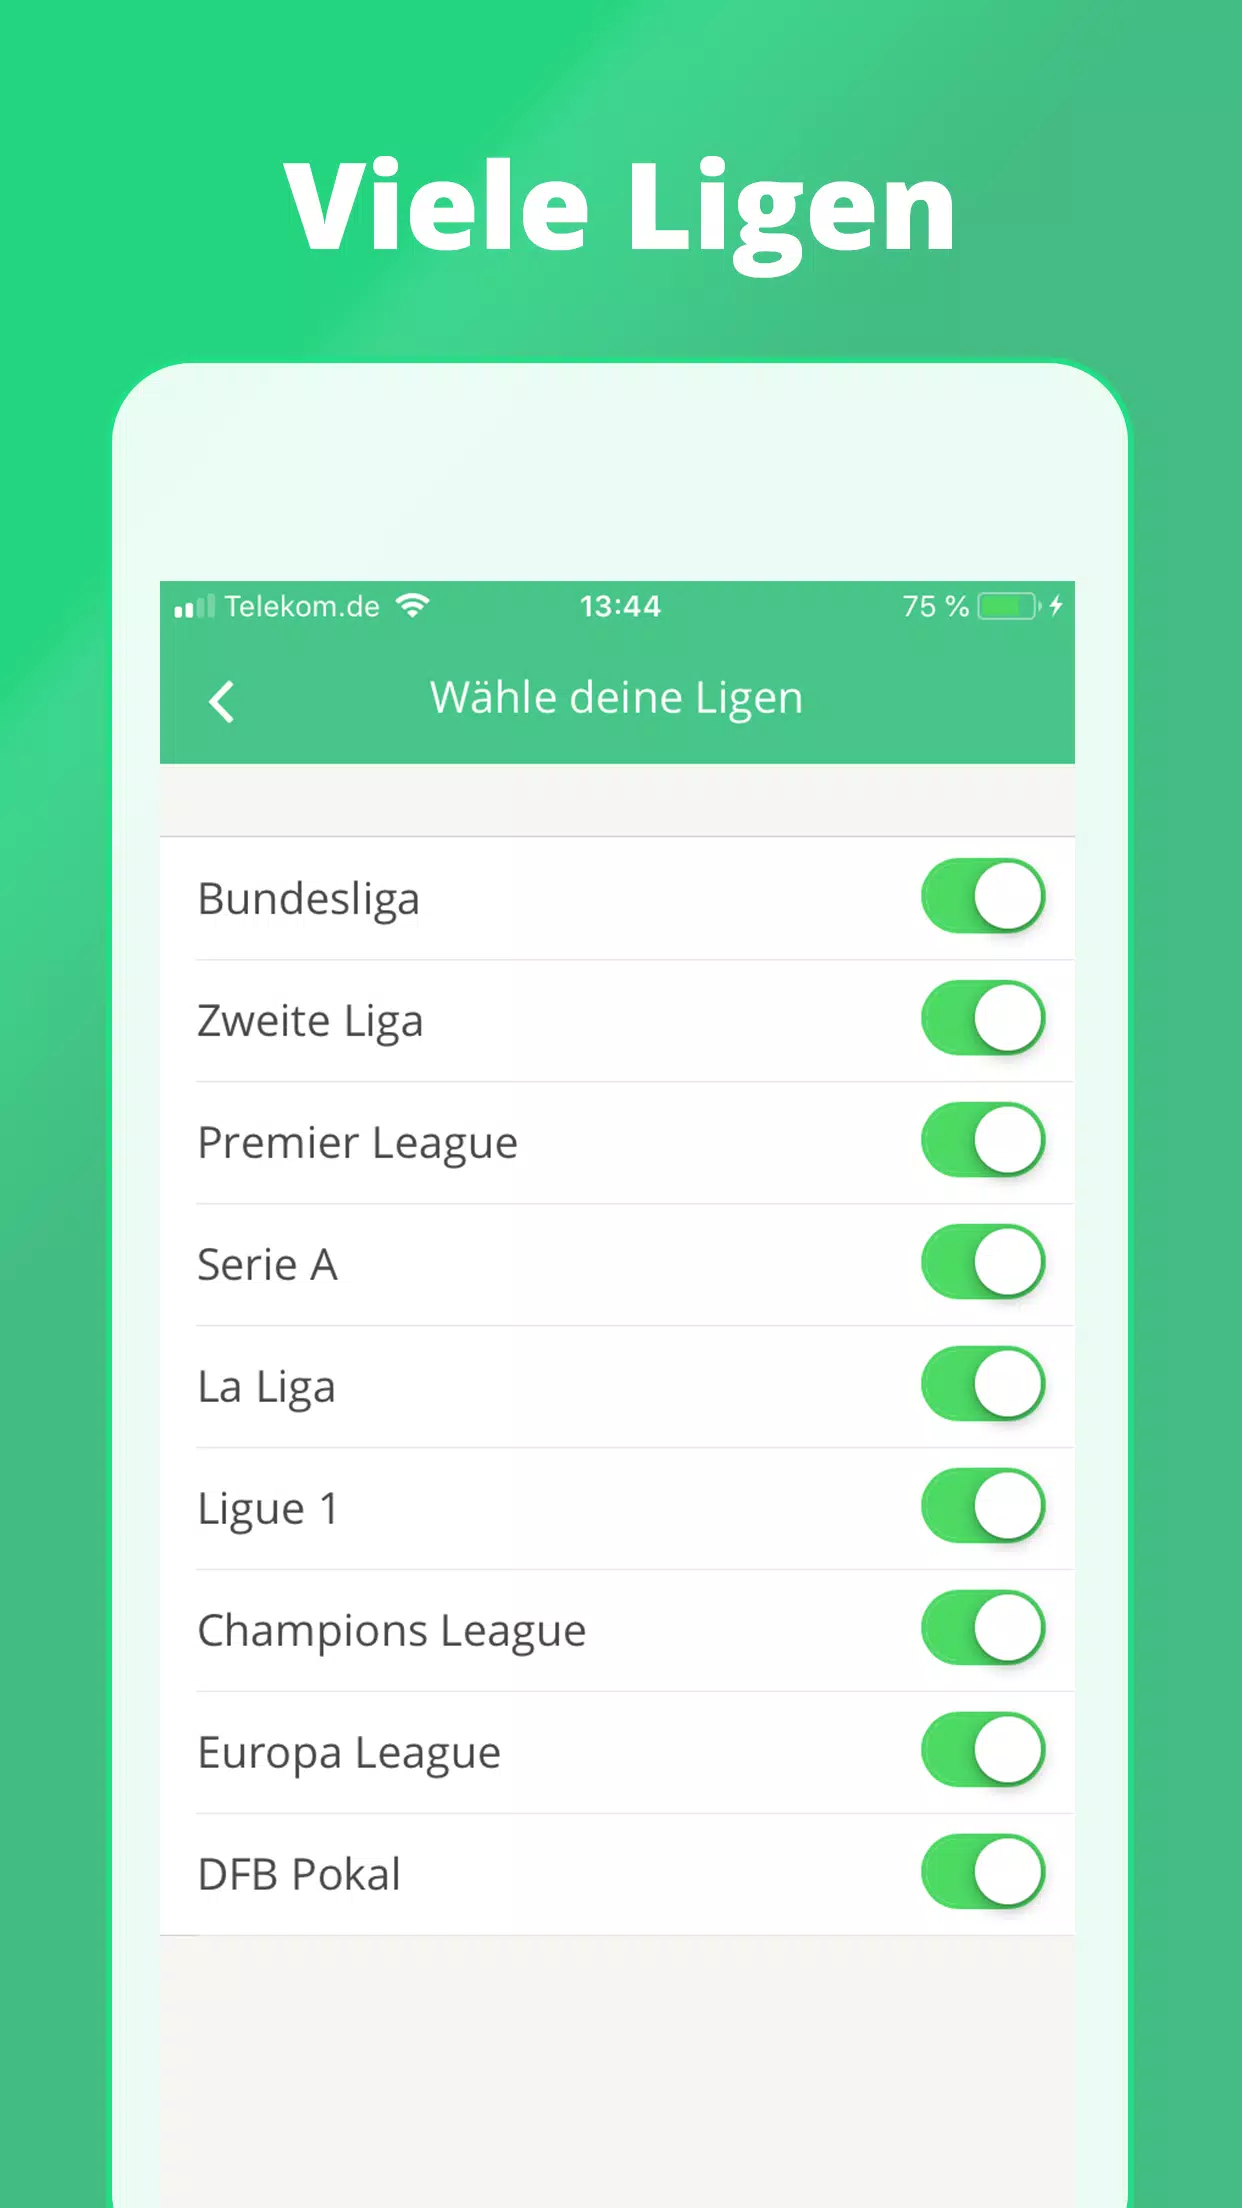 Tippspiel Gambify - Fußball Bundesliga & Mehr APK for Android Download